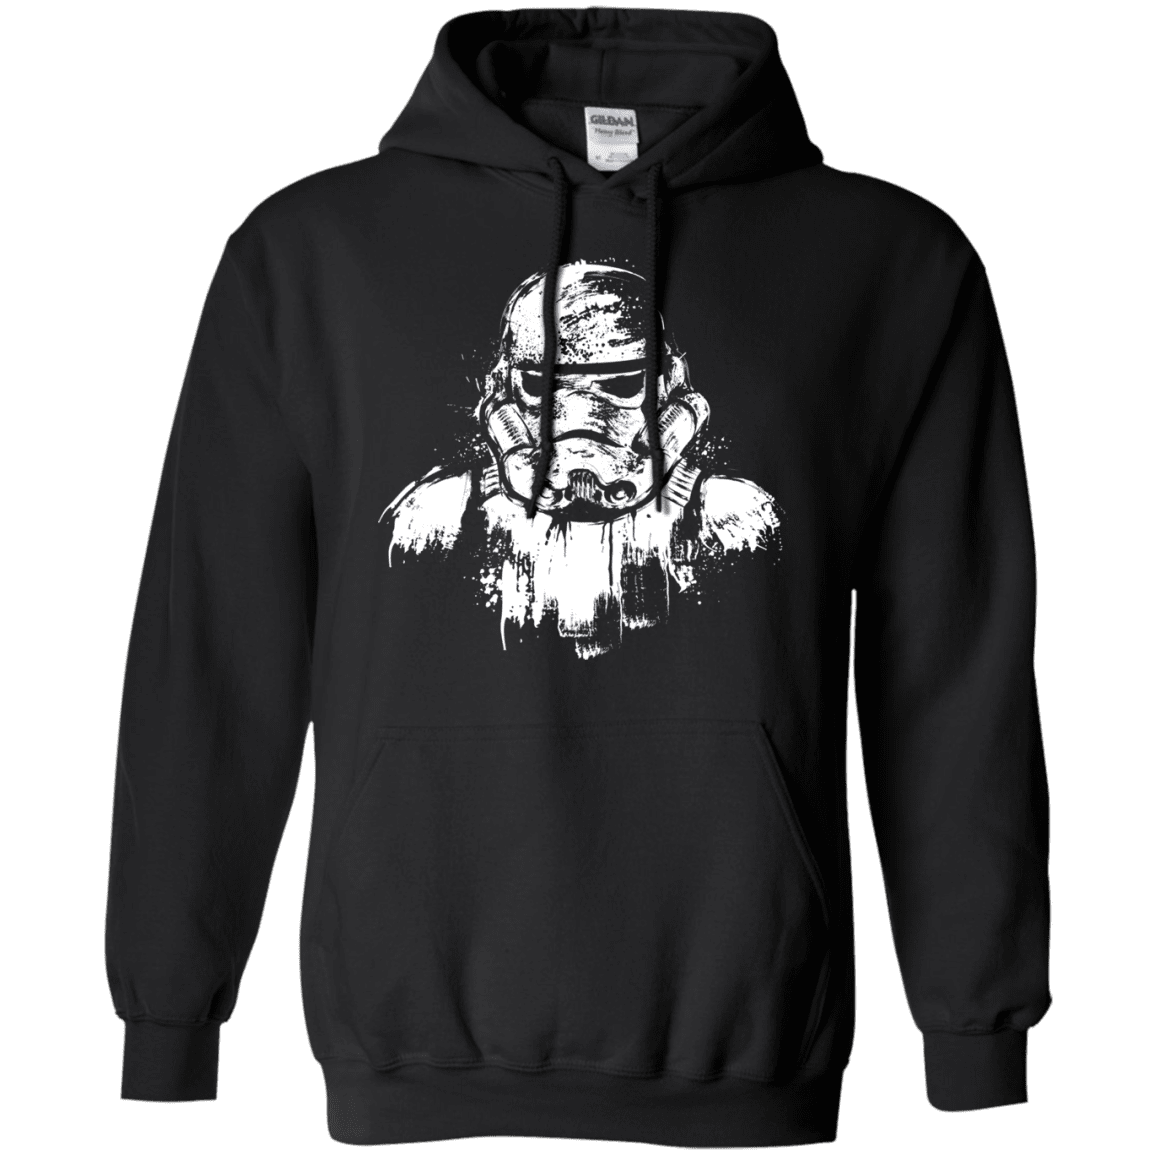 Sweatshirts Black / Small STORMTROOPER ARMOR Pullover Hoodie